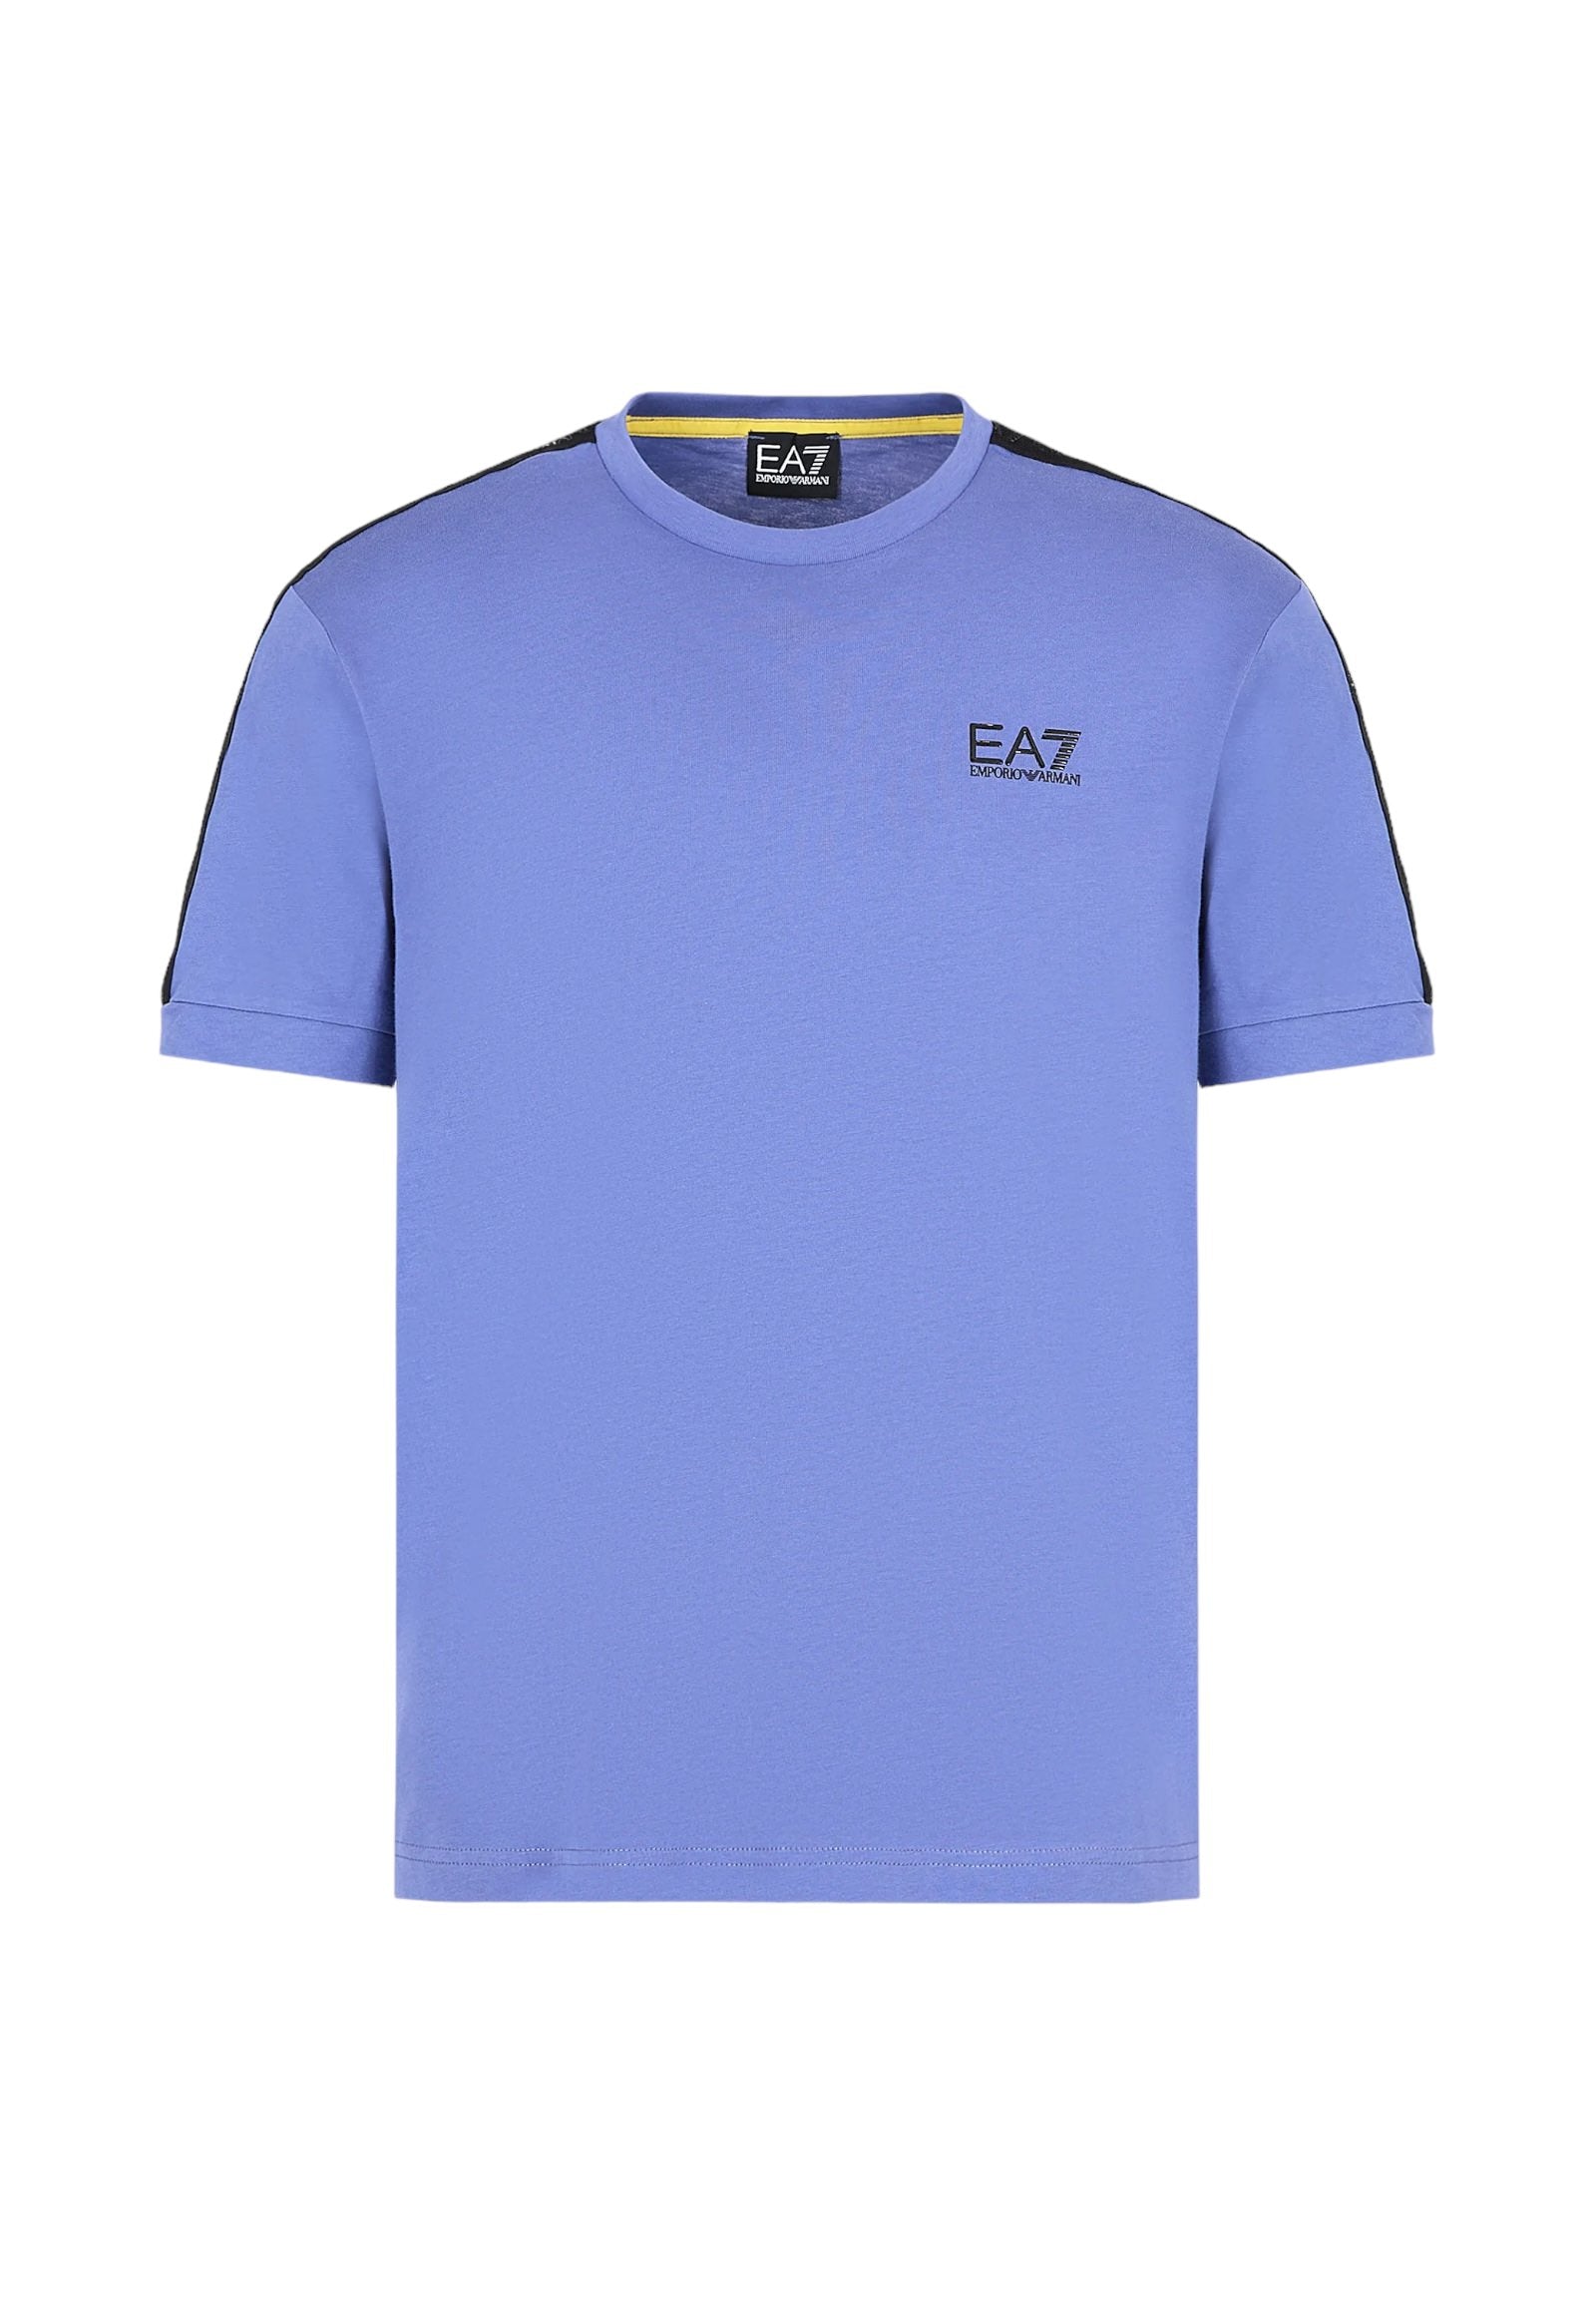 Ea7 Emporio Armani T-Shirt* 3dpt35 Marlin